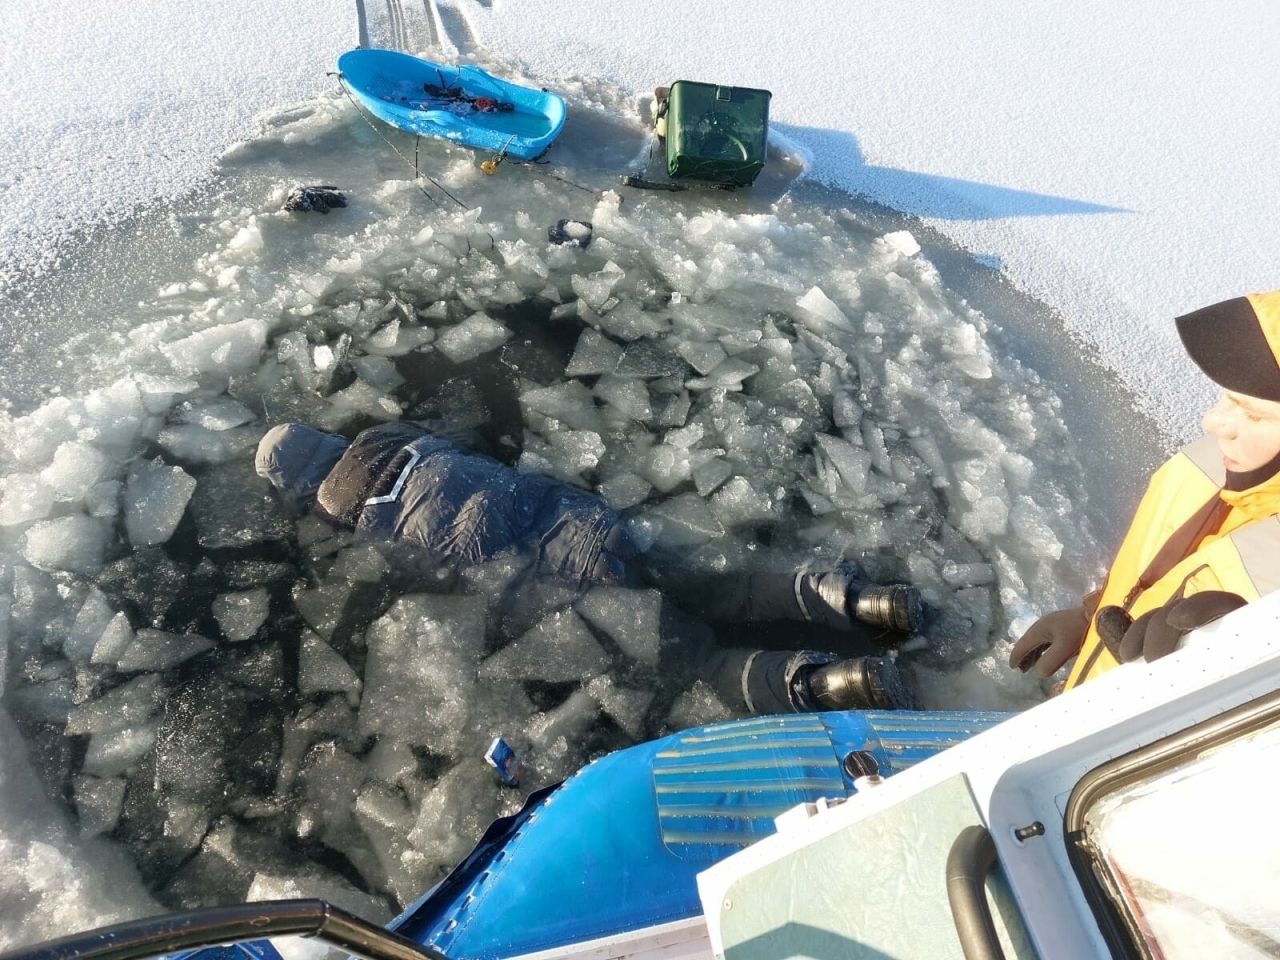 В Татарстане рыбак погиб, провалившись под лед